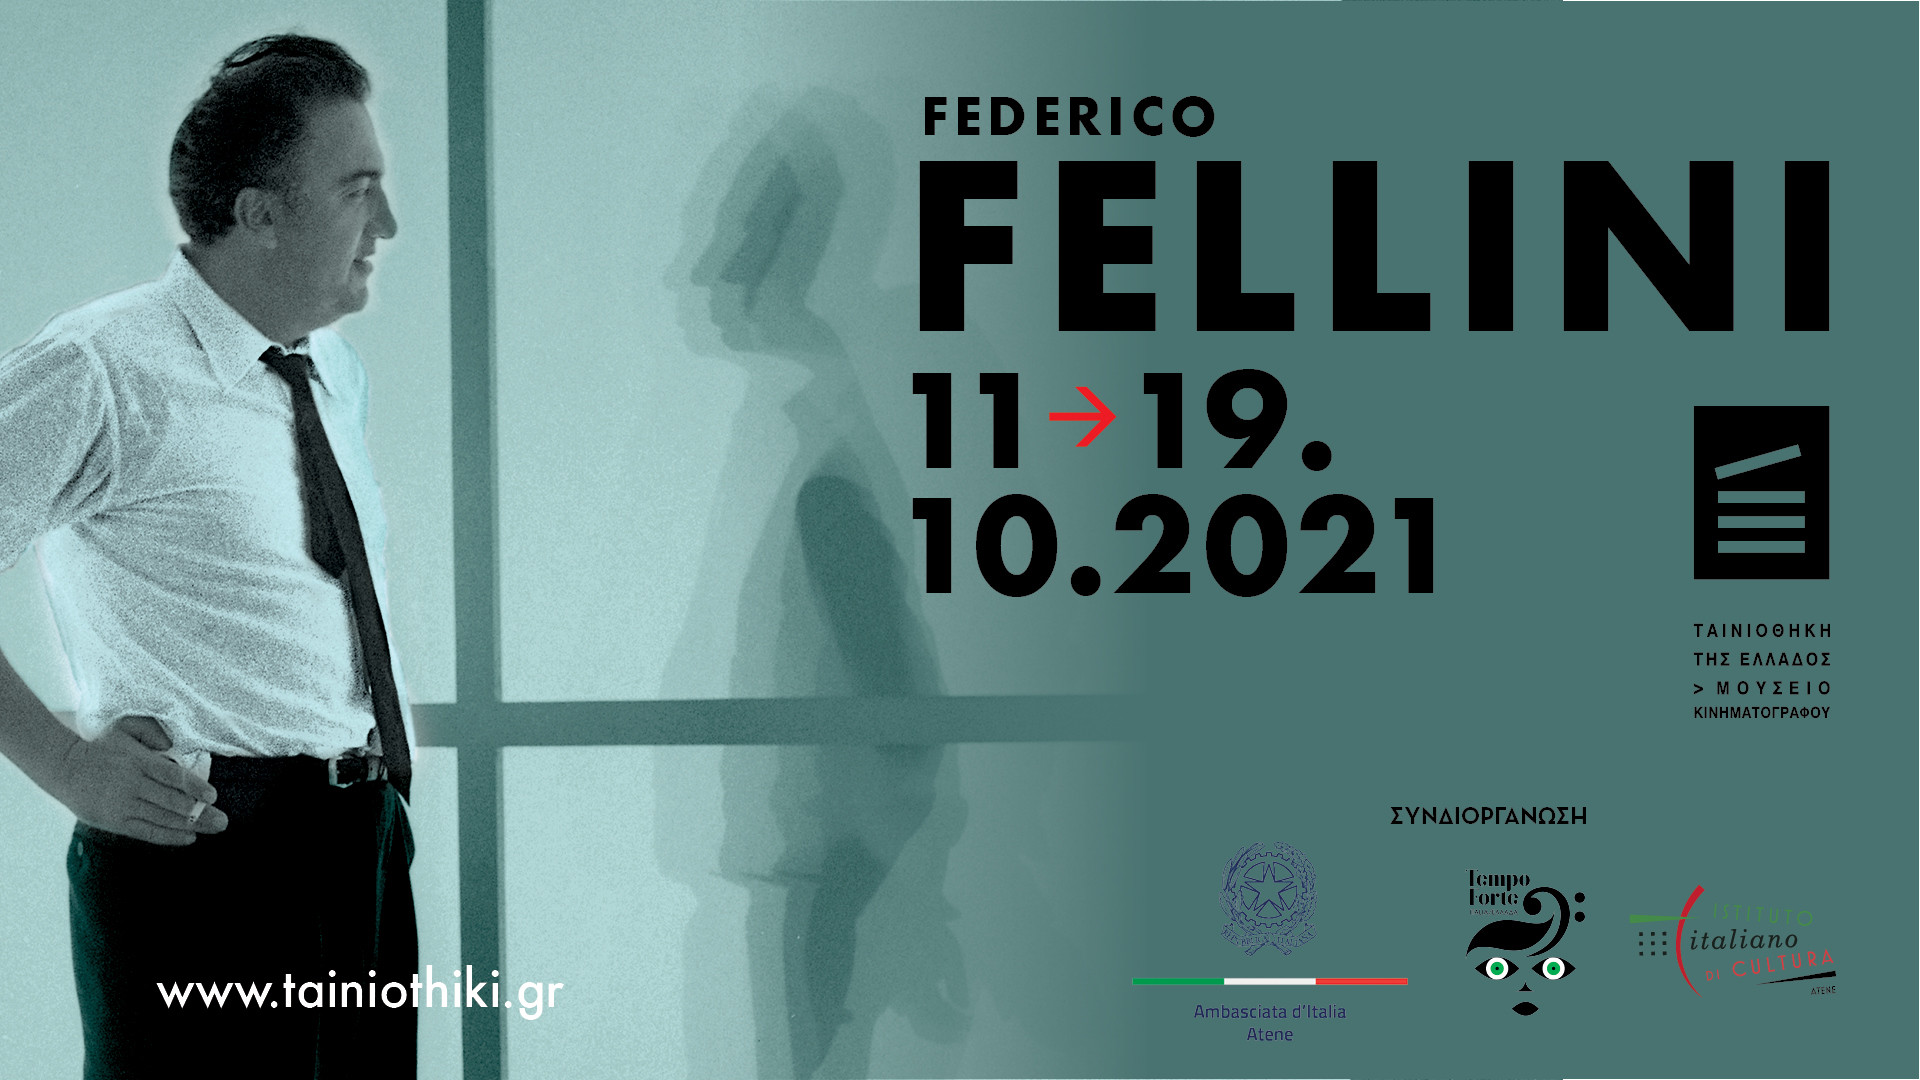 Federico Fellini tribute